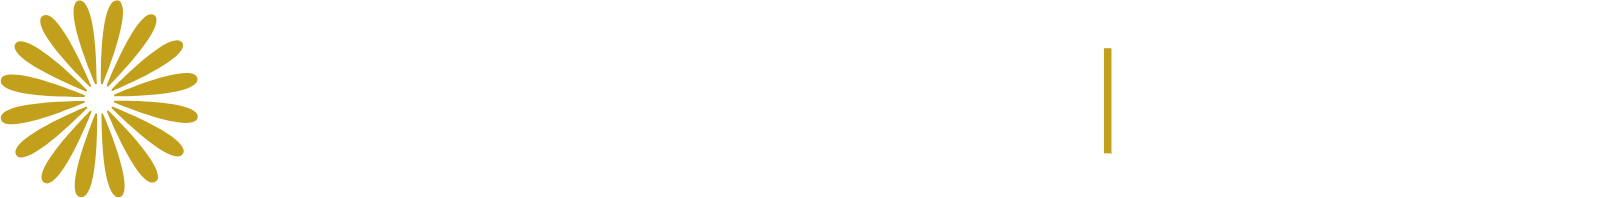 Luther Burbank logo large for dark backgrounds (transparent PNG)